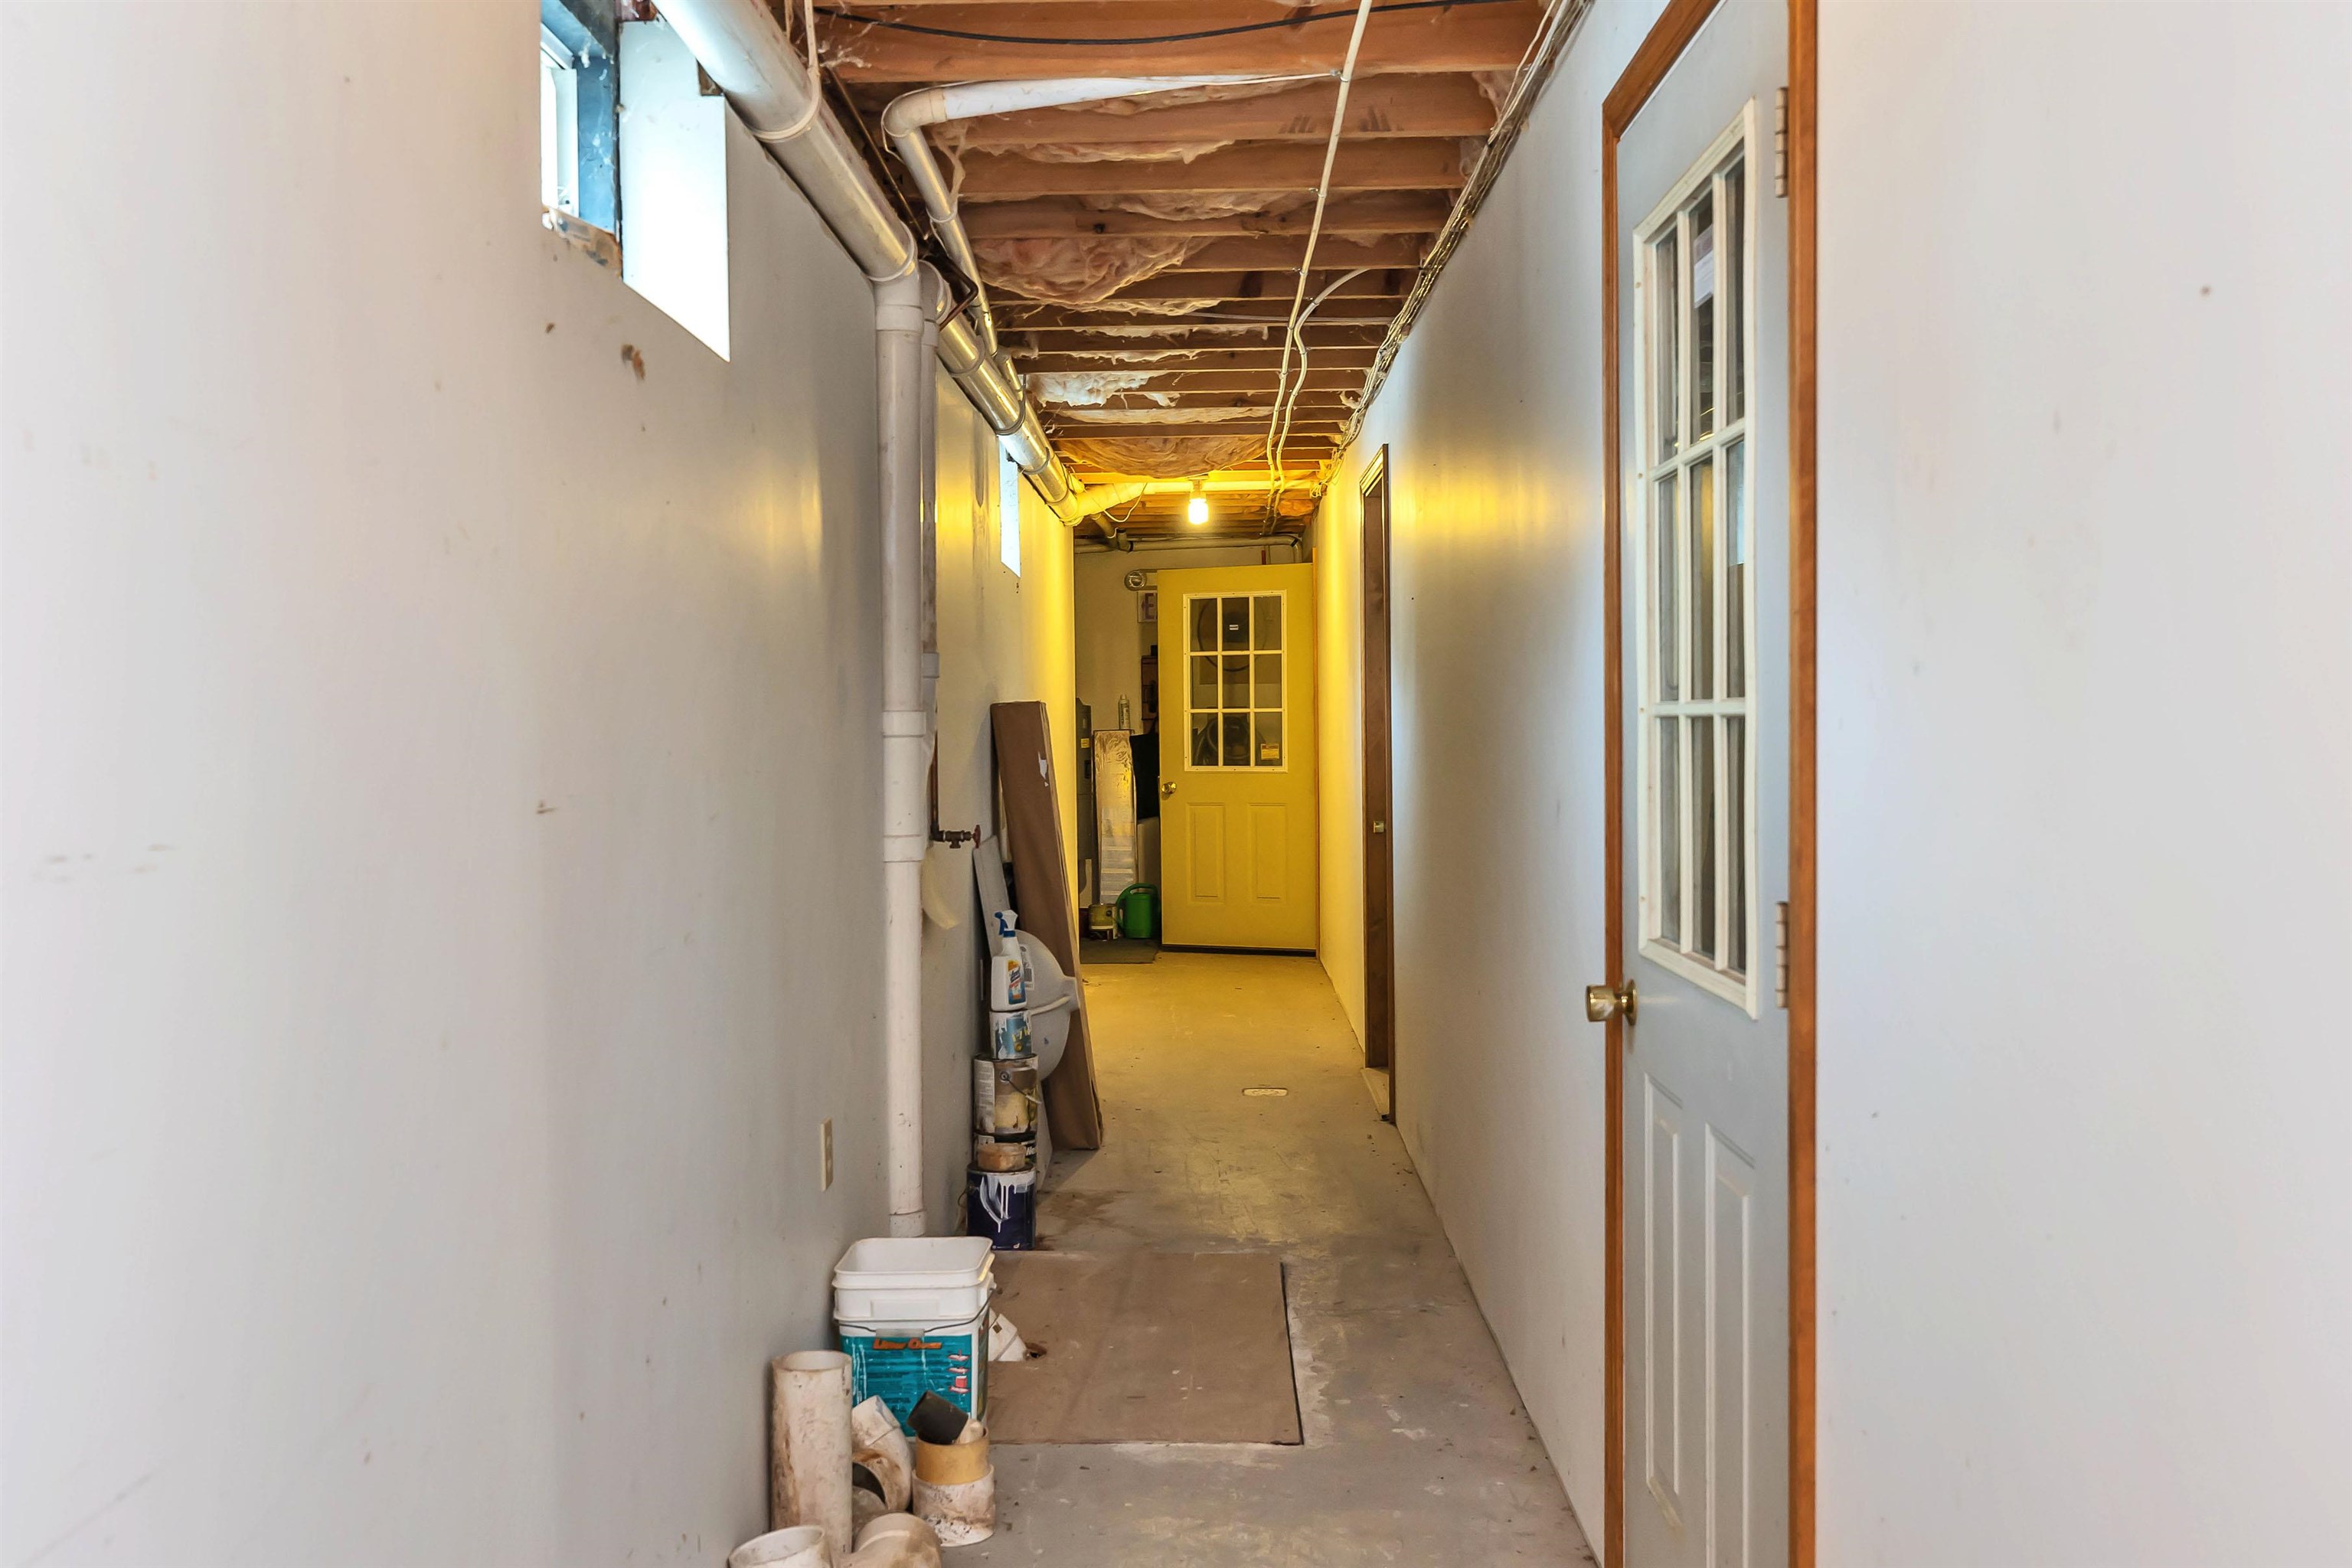 Hallway to locked tenant storage rooms